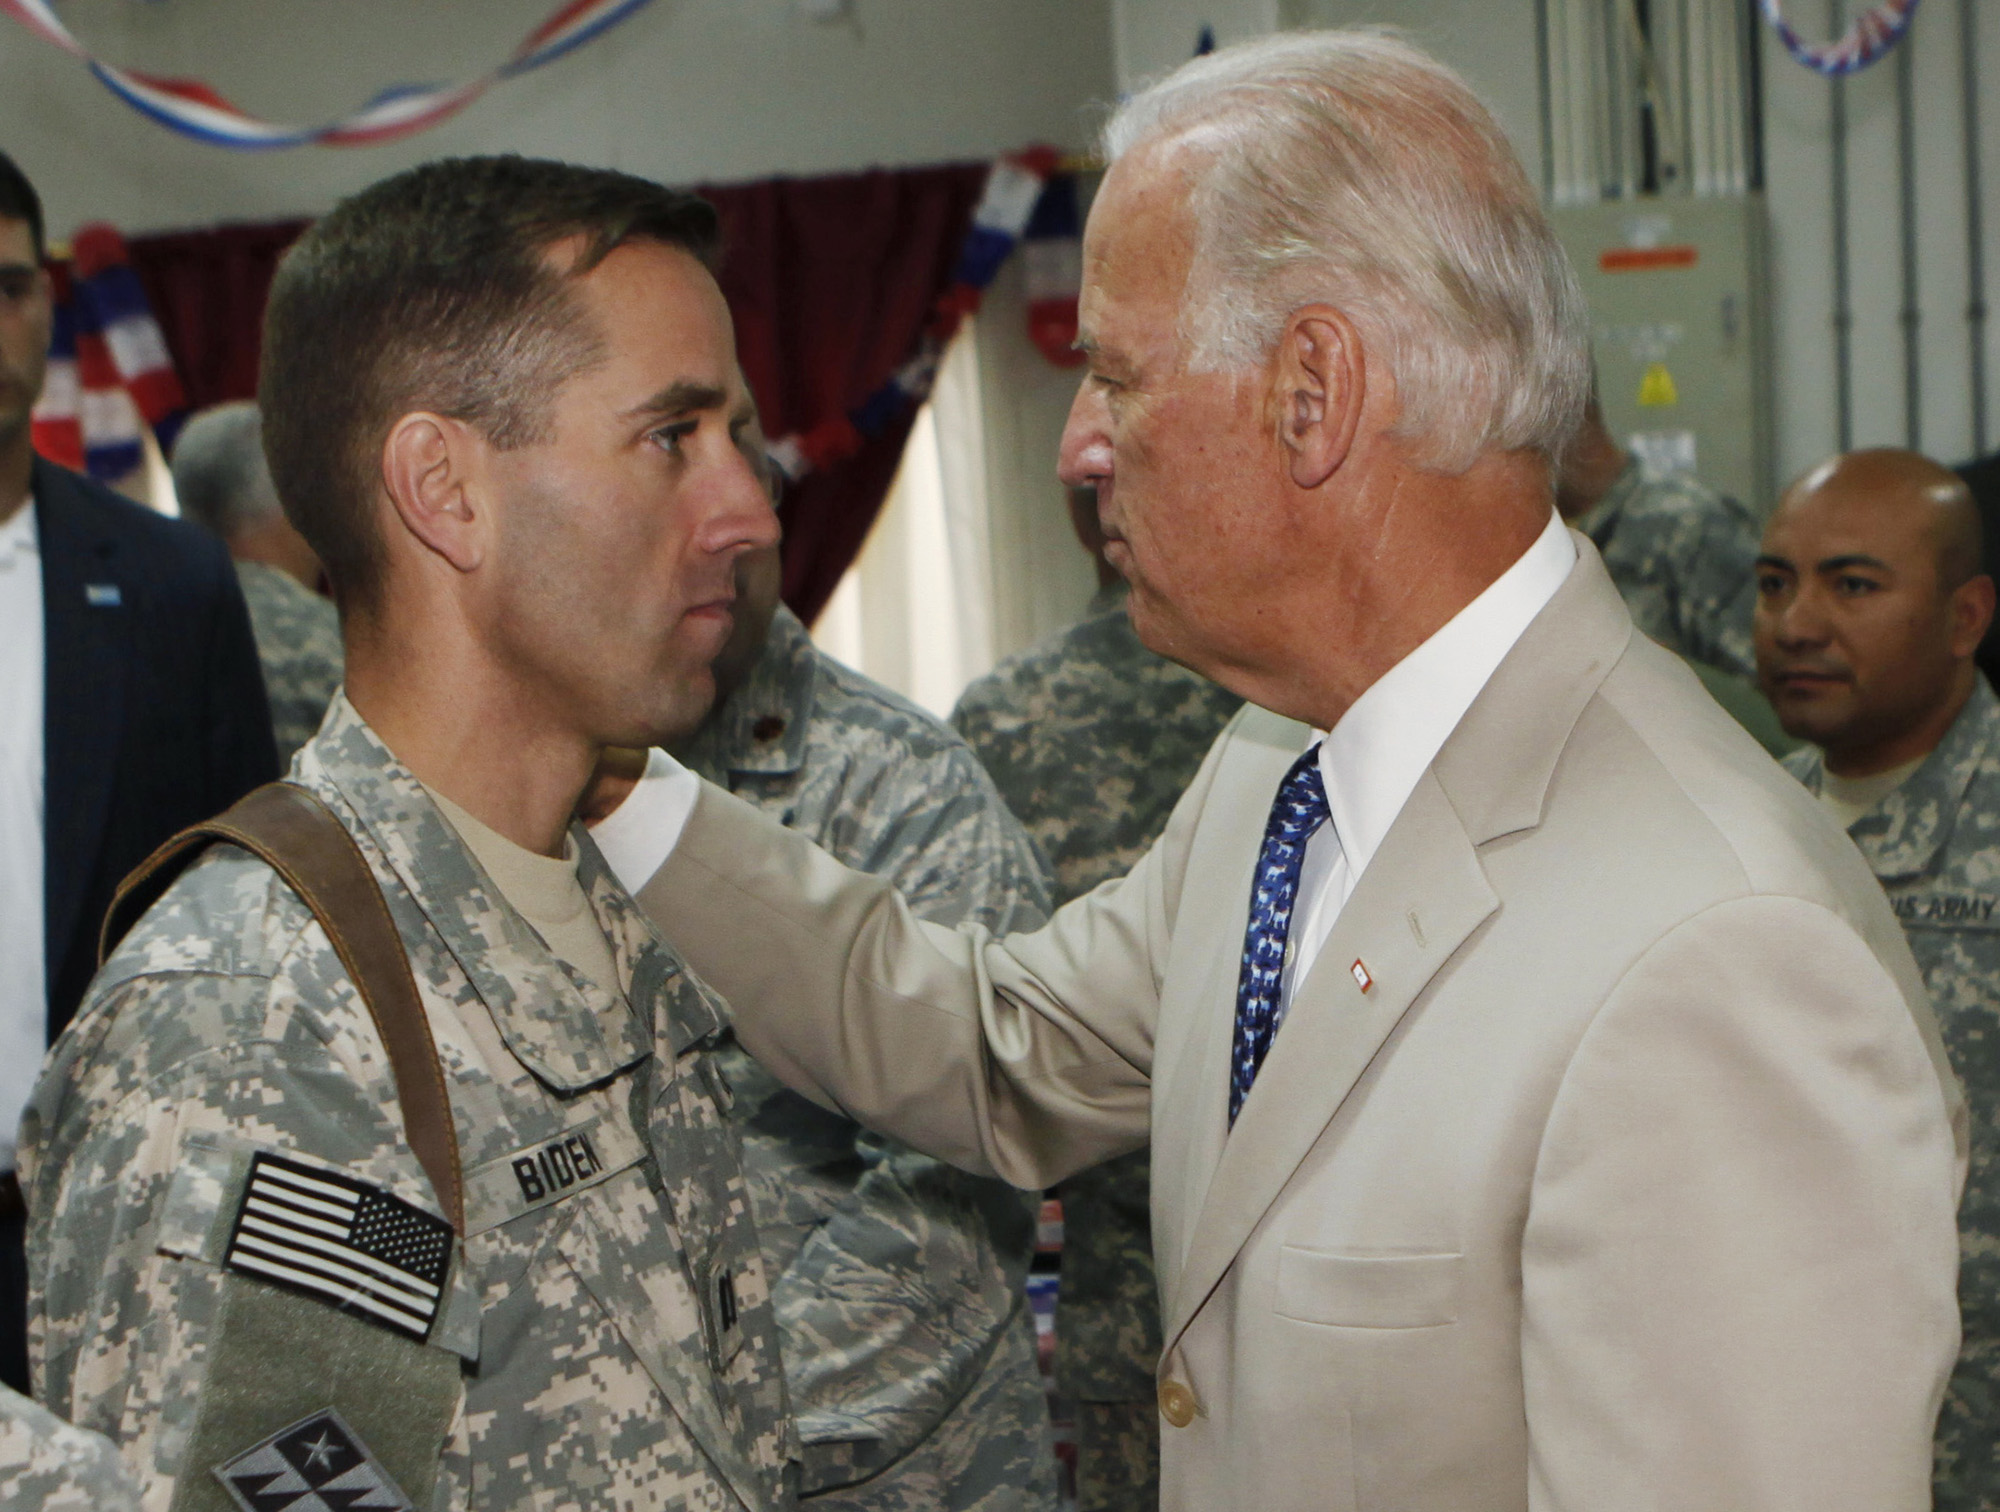 Honoring the legacy Maj. Biden